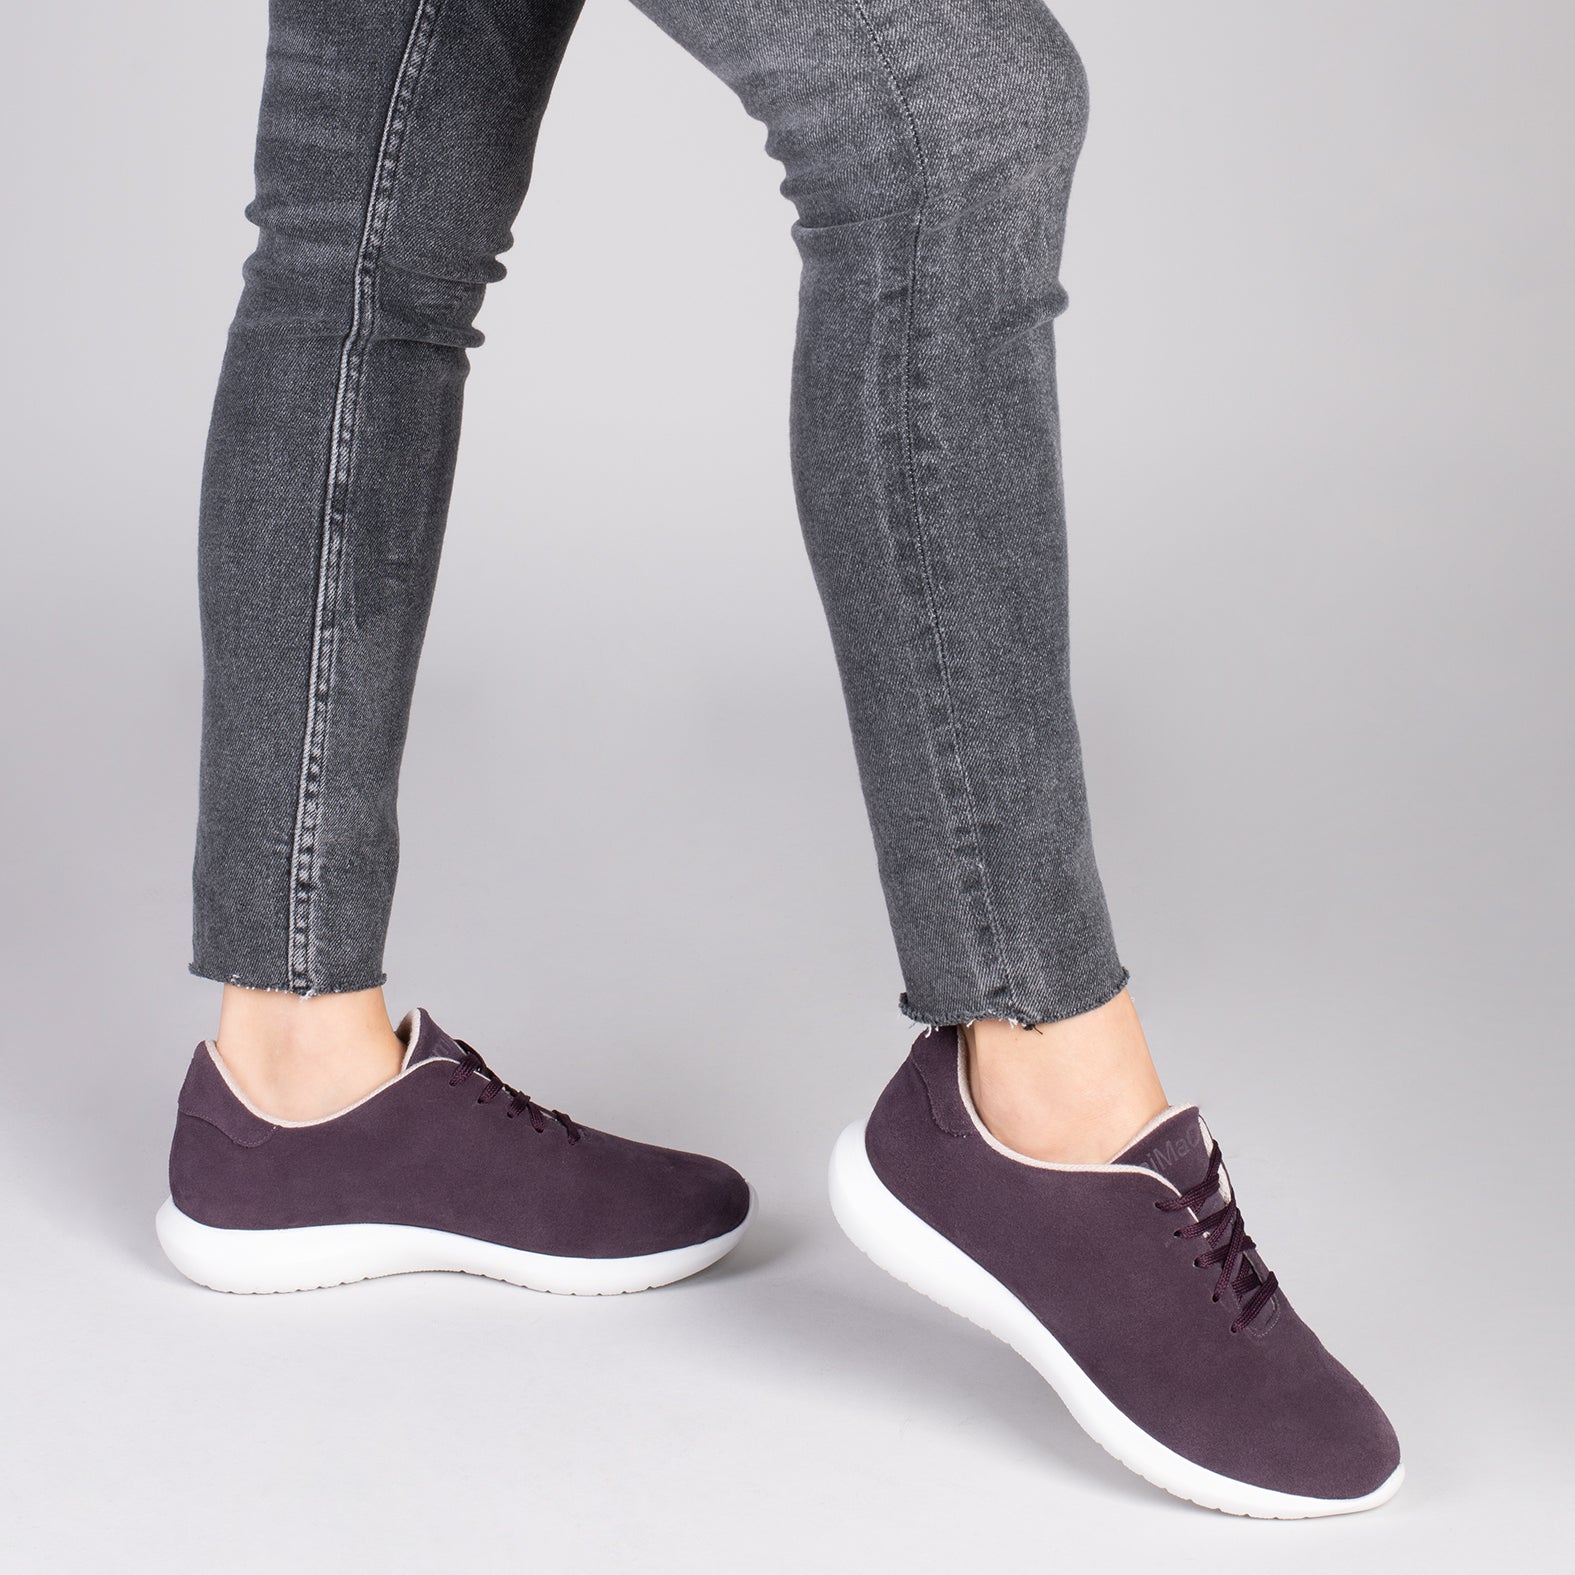 WALK – PURPLE comfortable women’s sneakers